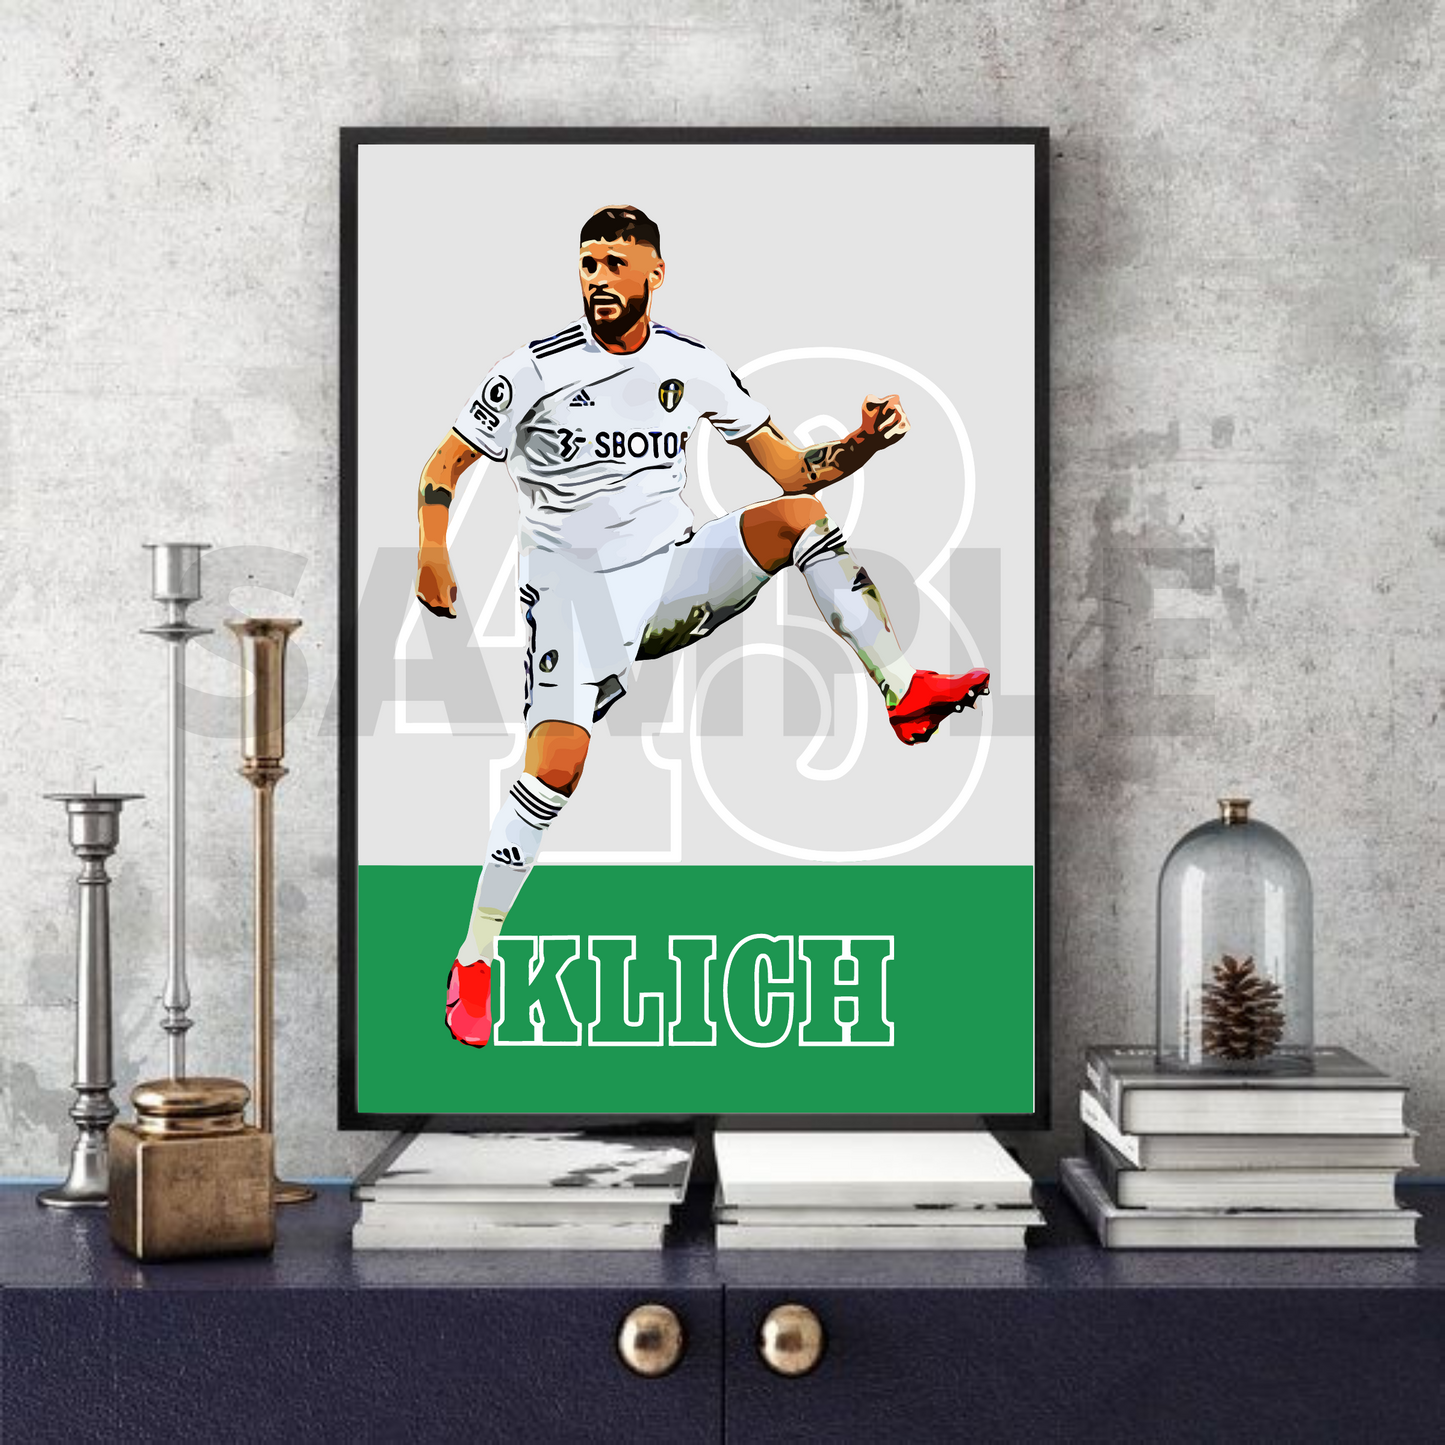 Mateusz Klich - Leeds United Football collectible/memorabilia/print